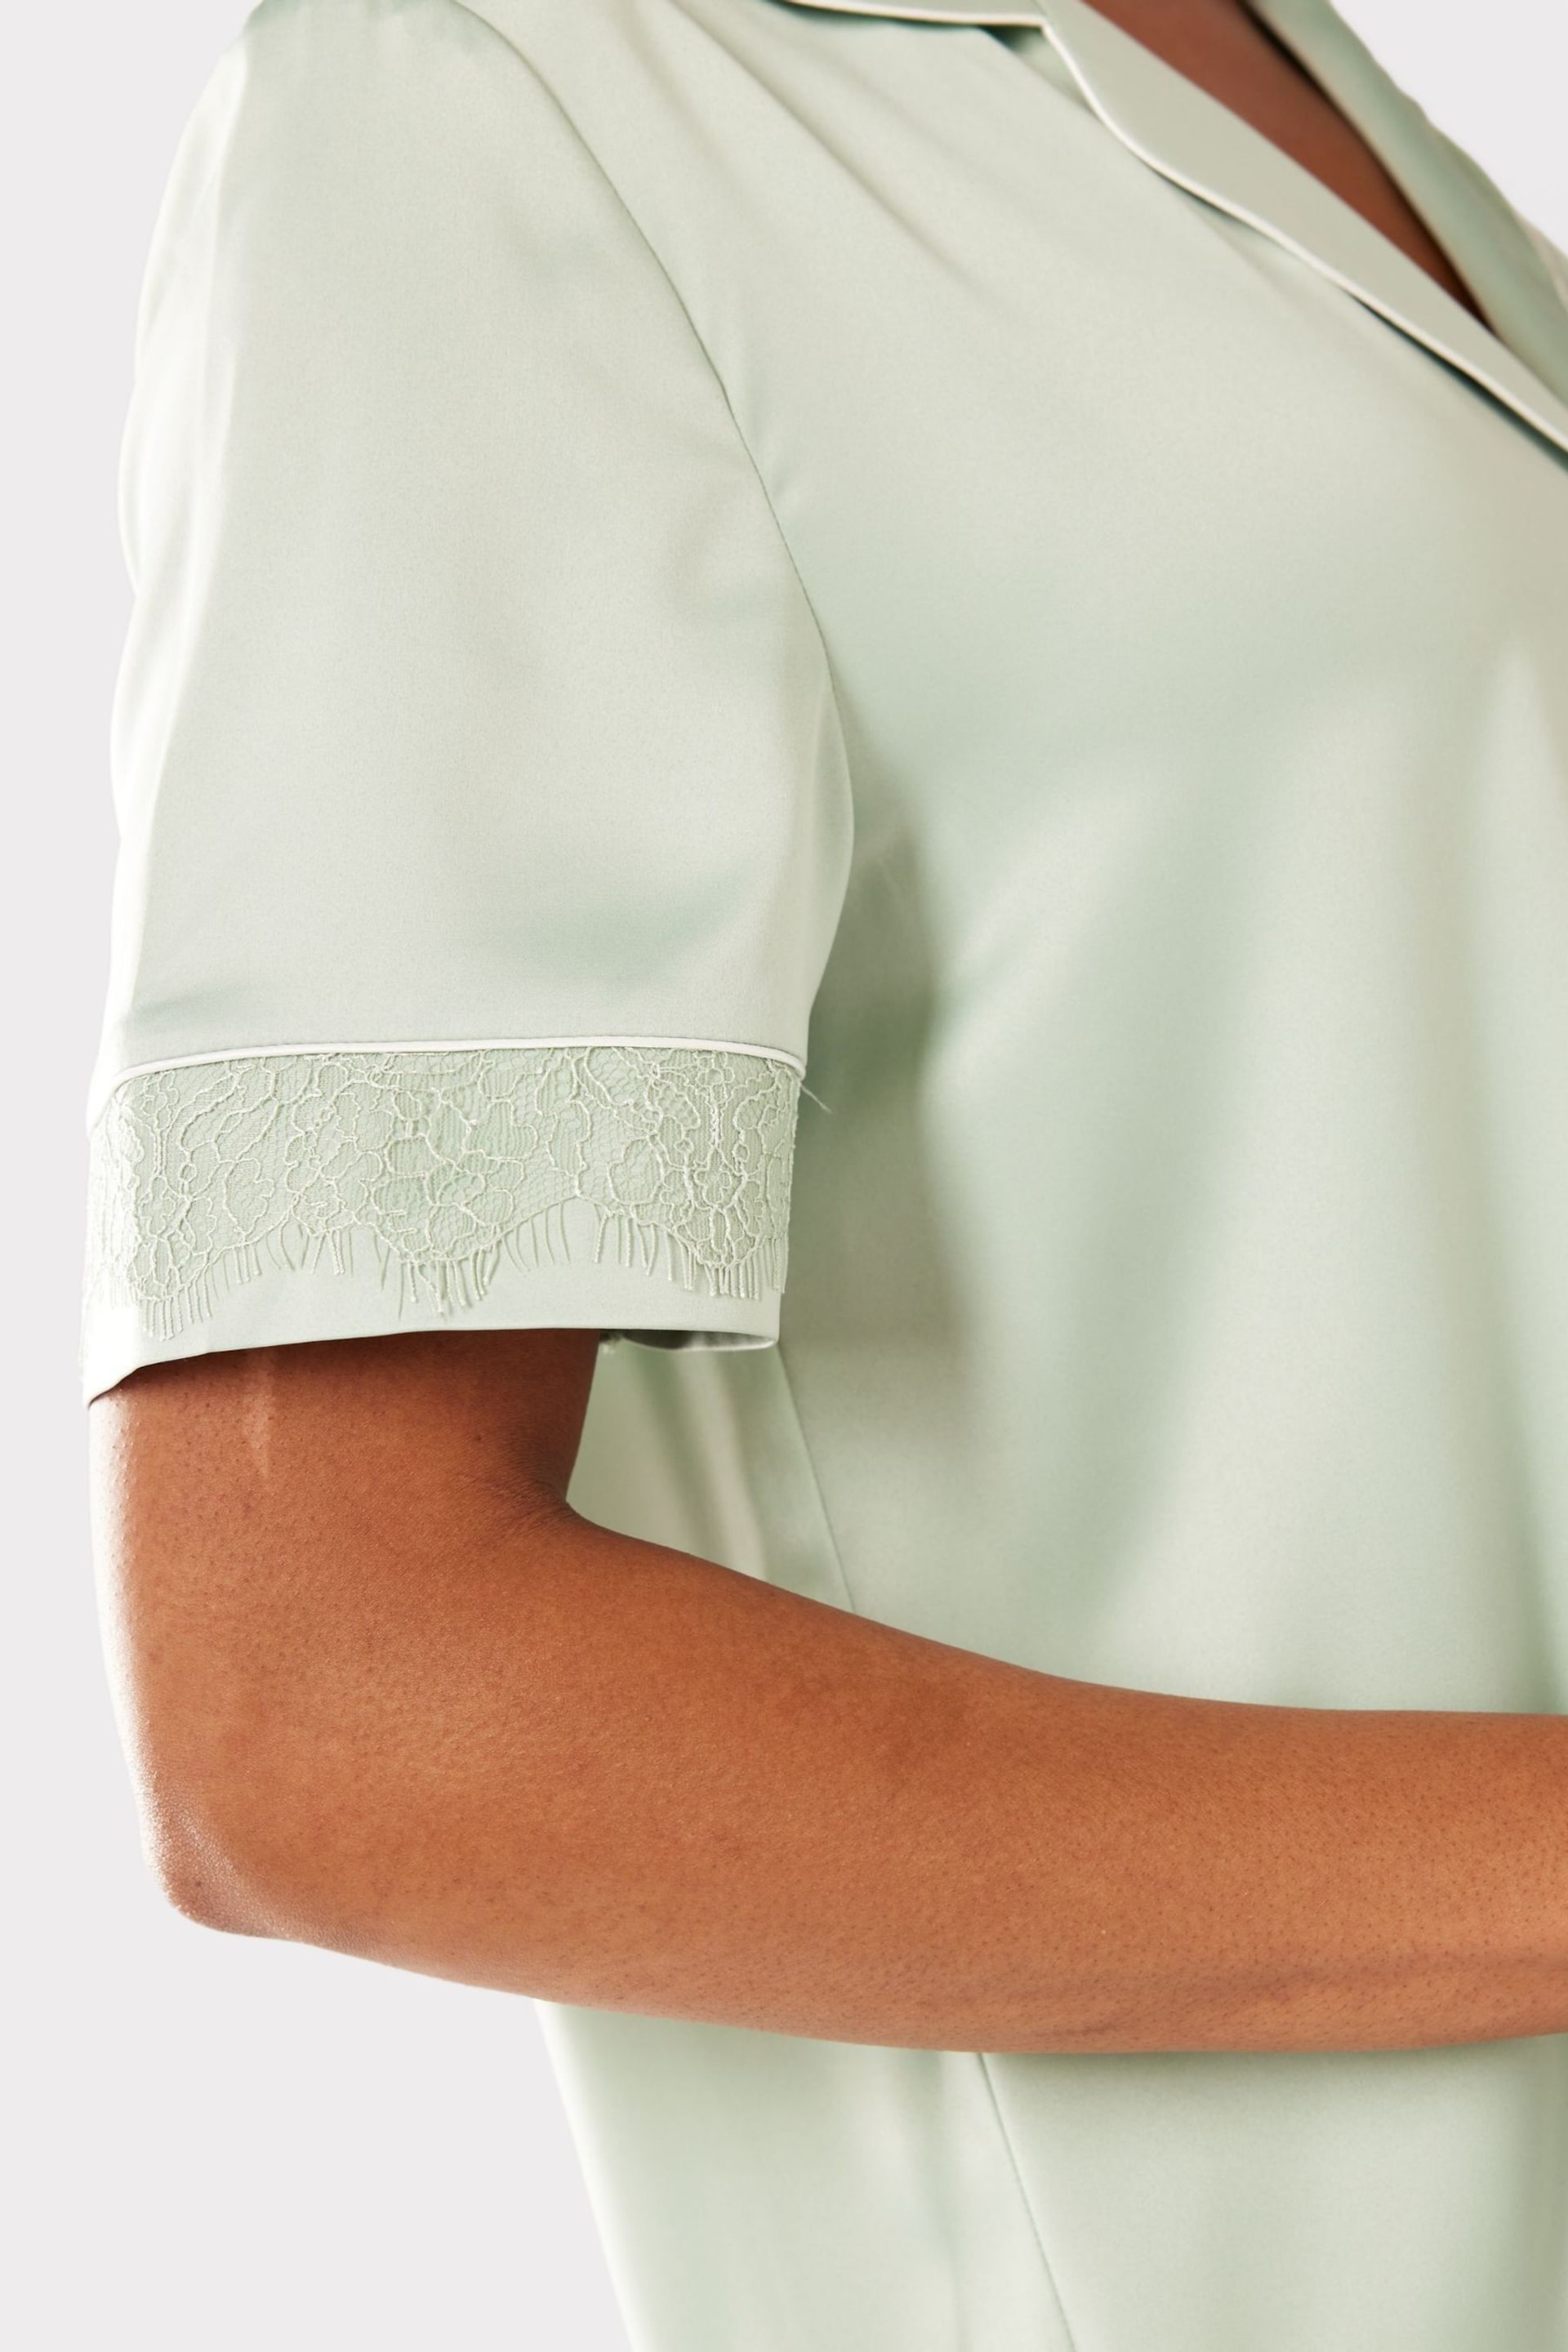 Chelsea Peers Green Satin Lace Trim Short Pyjama Set - Image 5 of 5